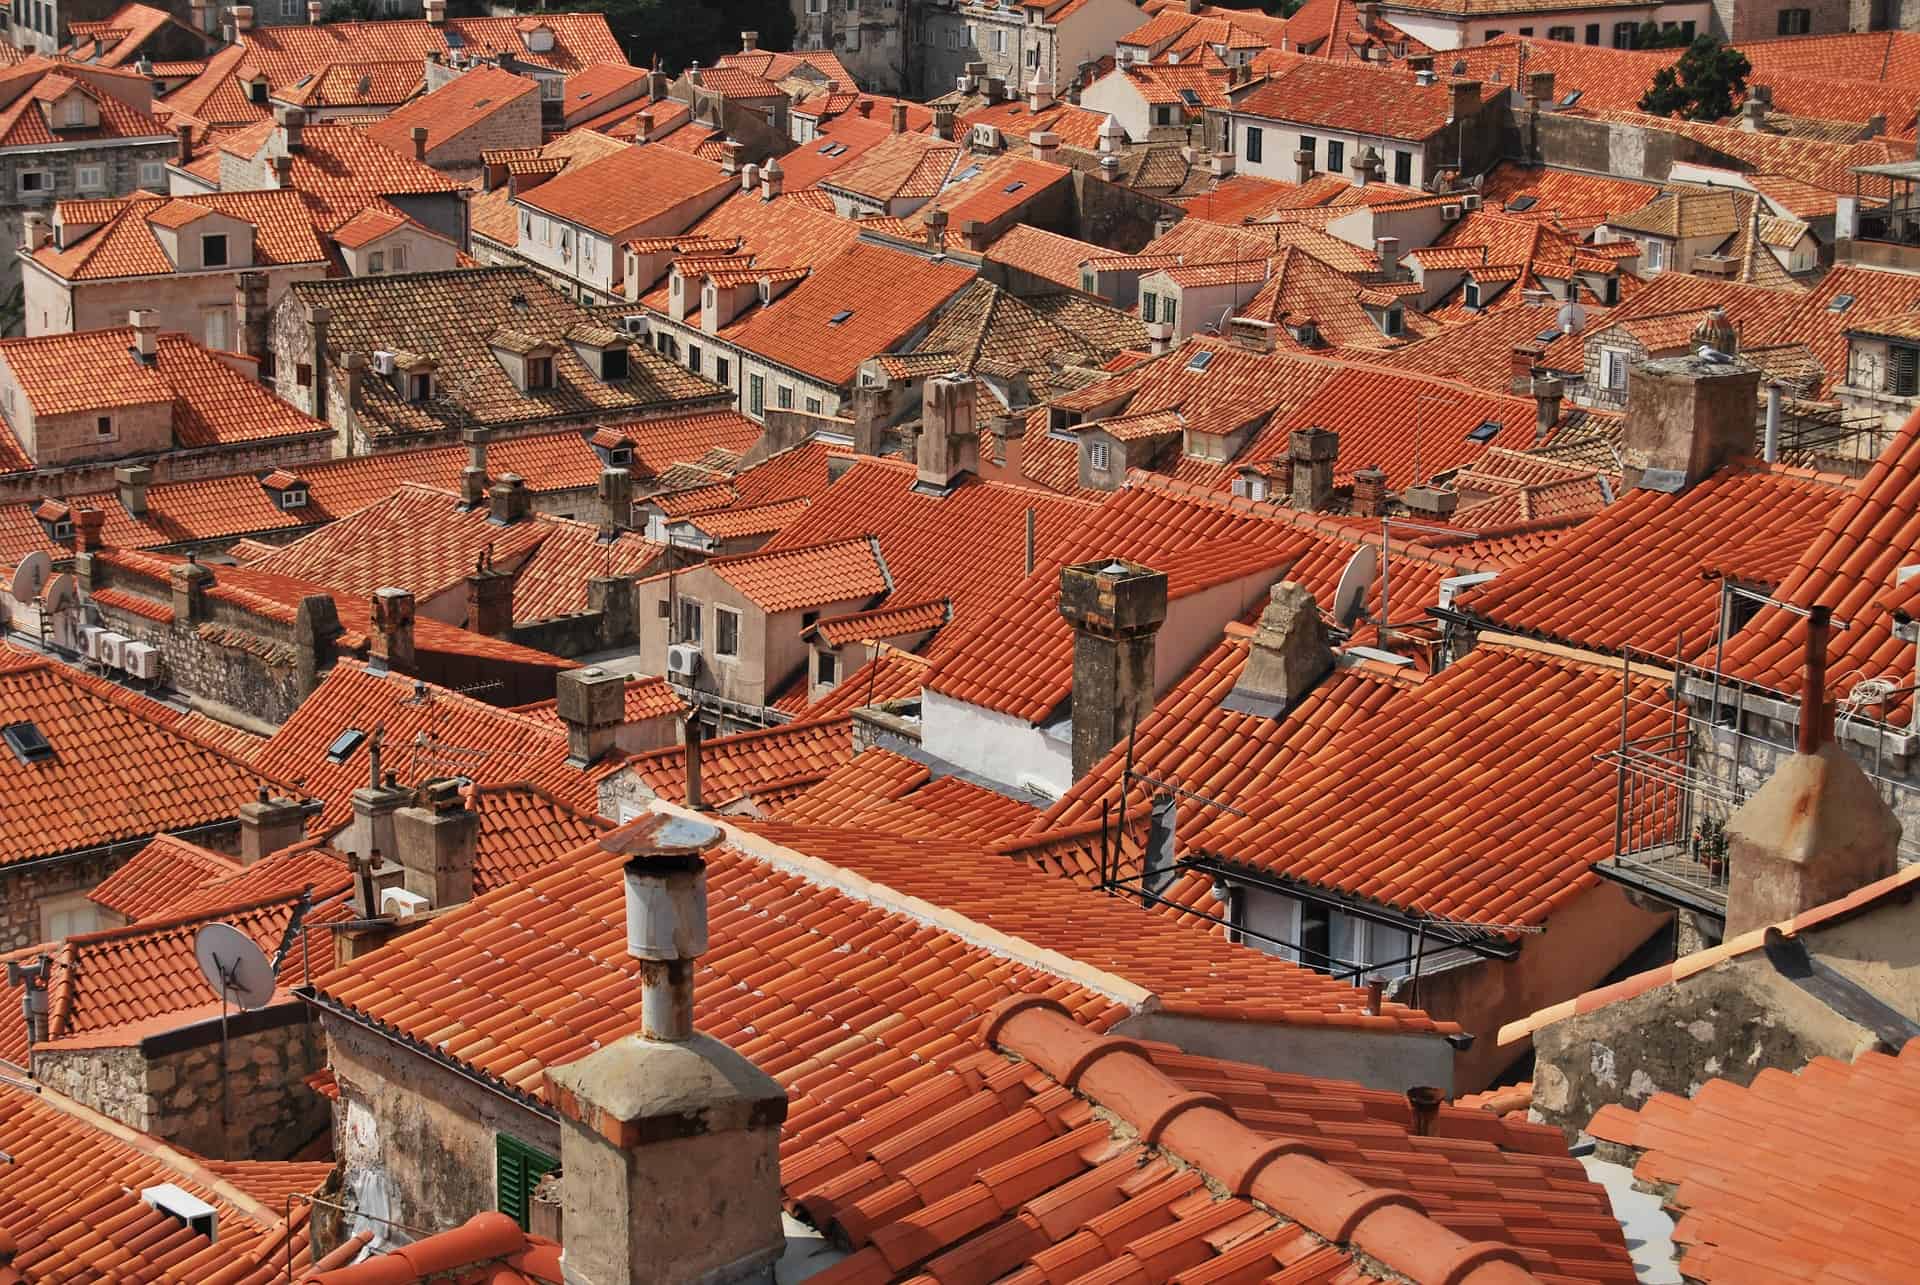 Day One: Dubrovnik